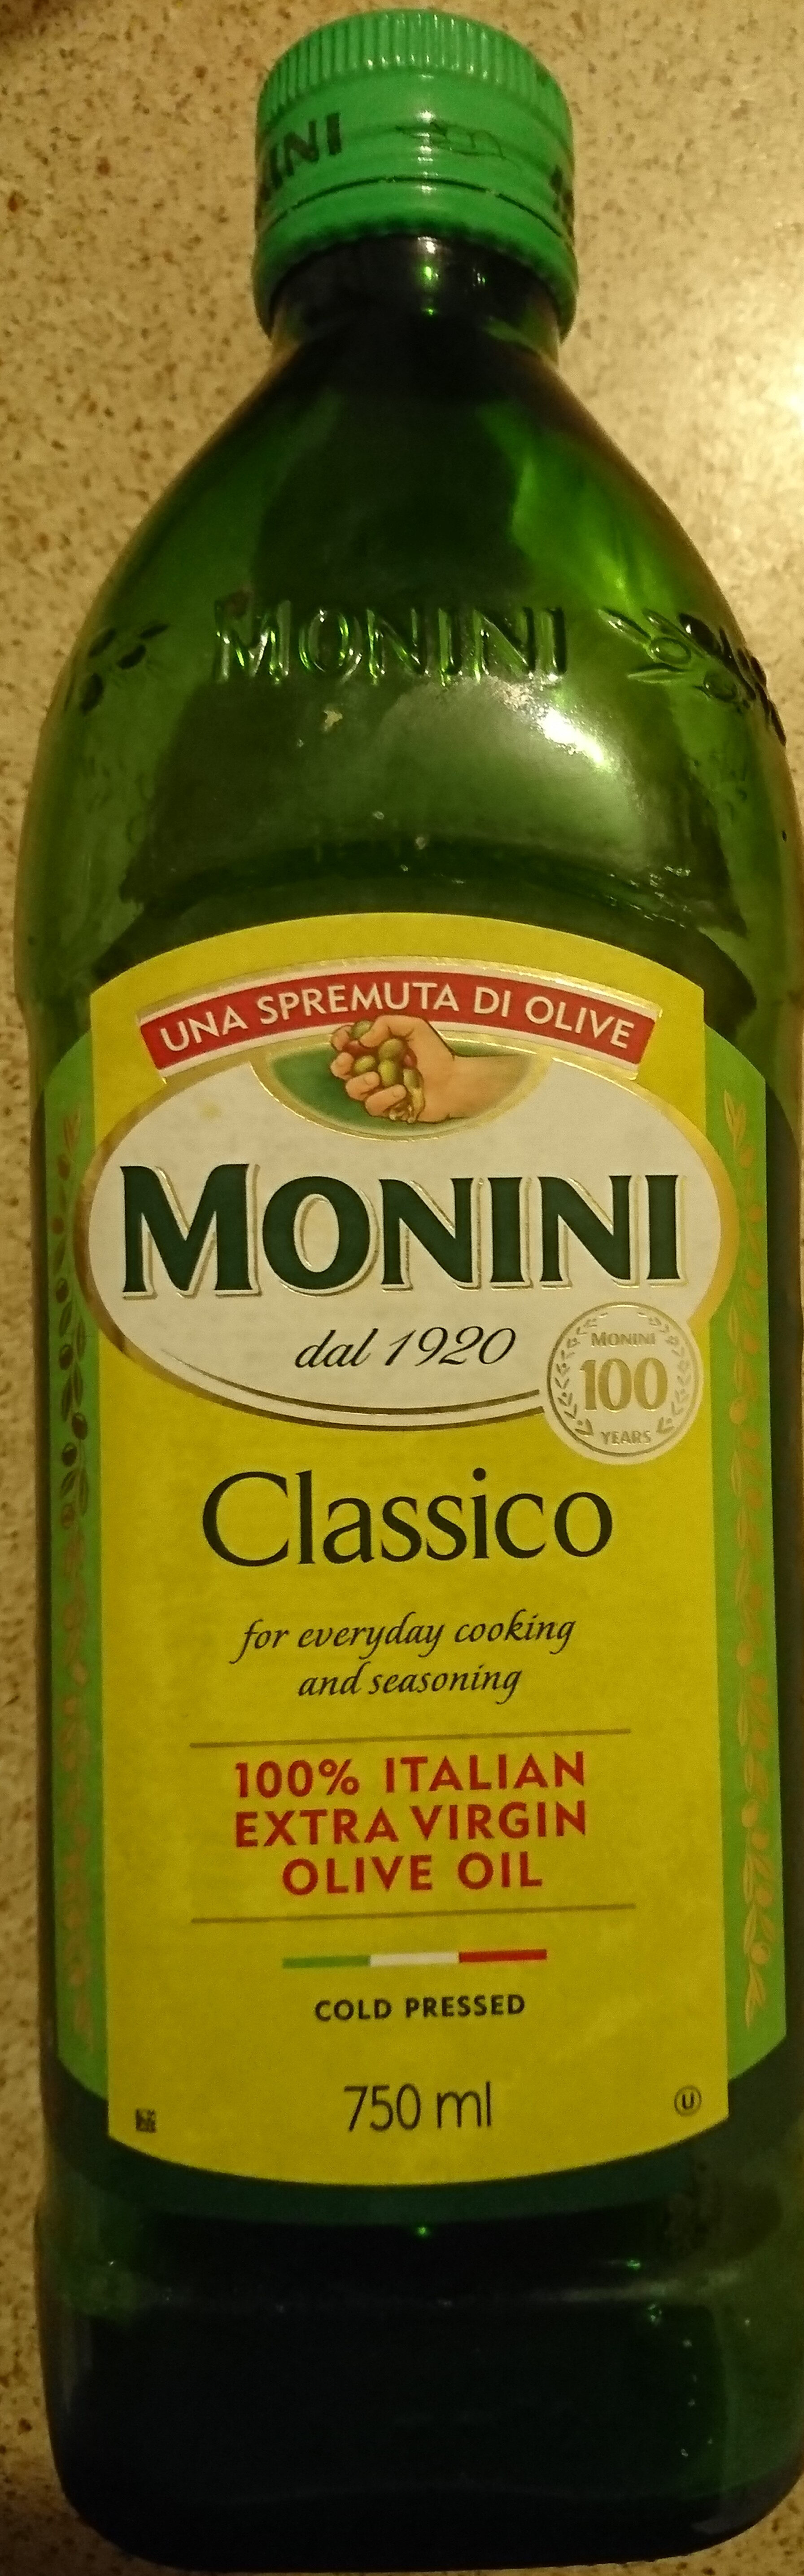 Classico 100% Italian Extra Virgin Olive Oil - Product